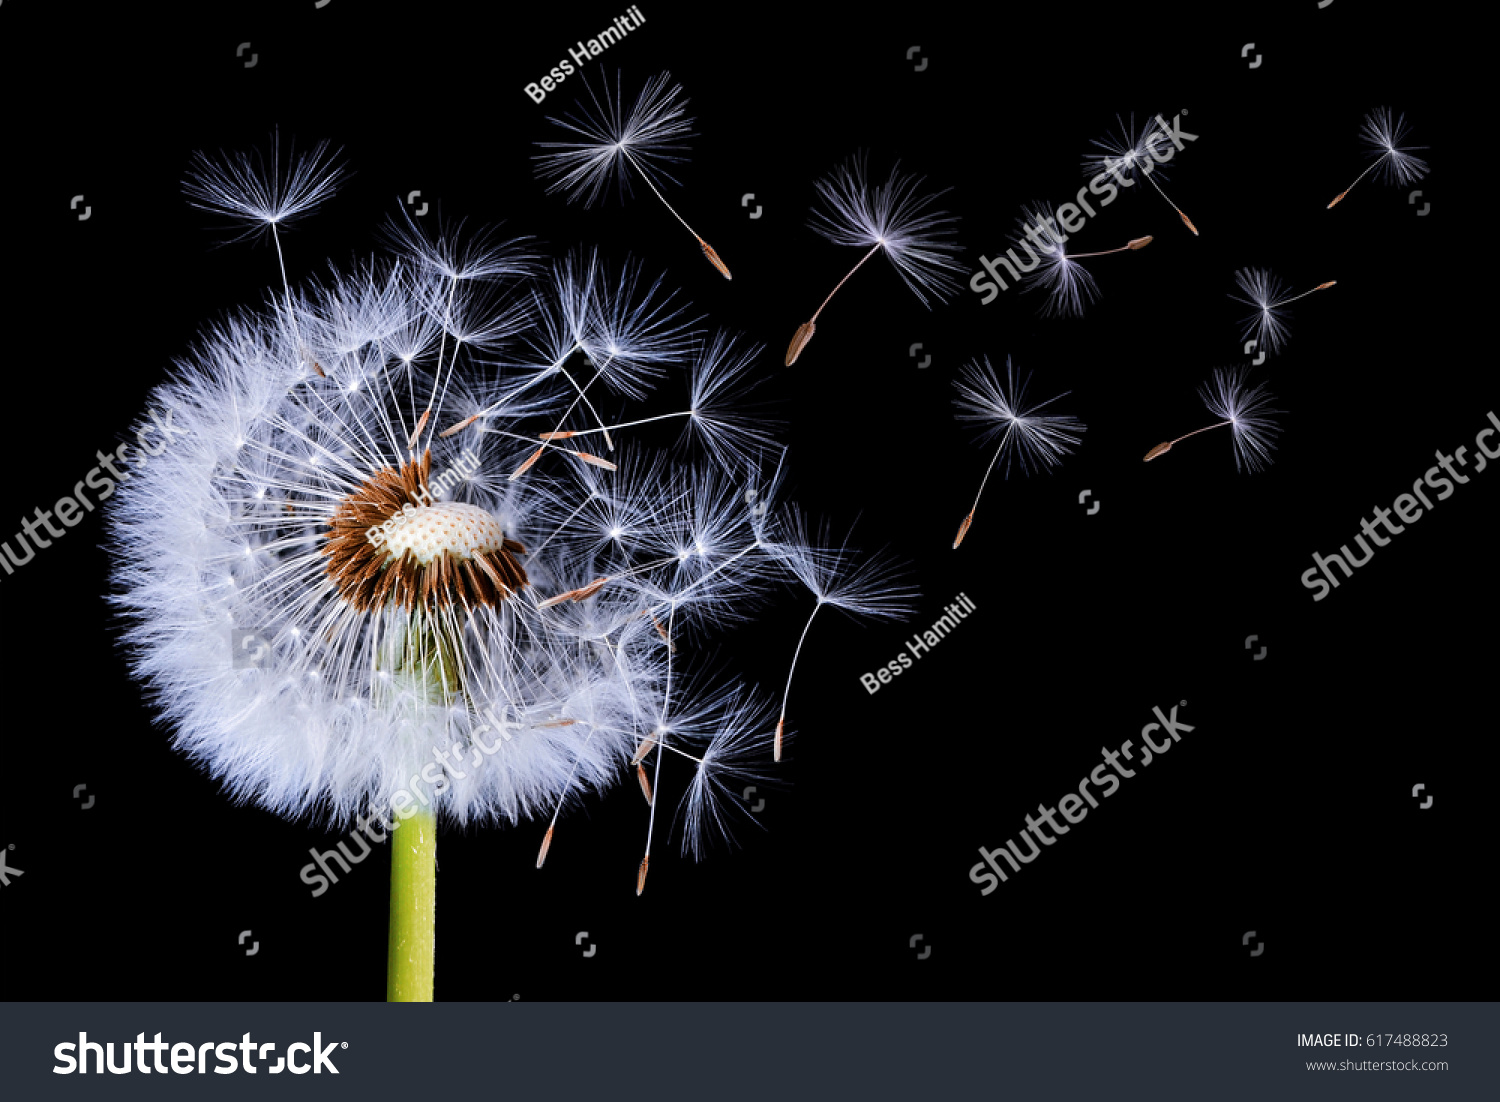 Dandelion blowing on black background #617488823